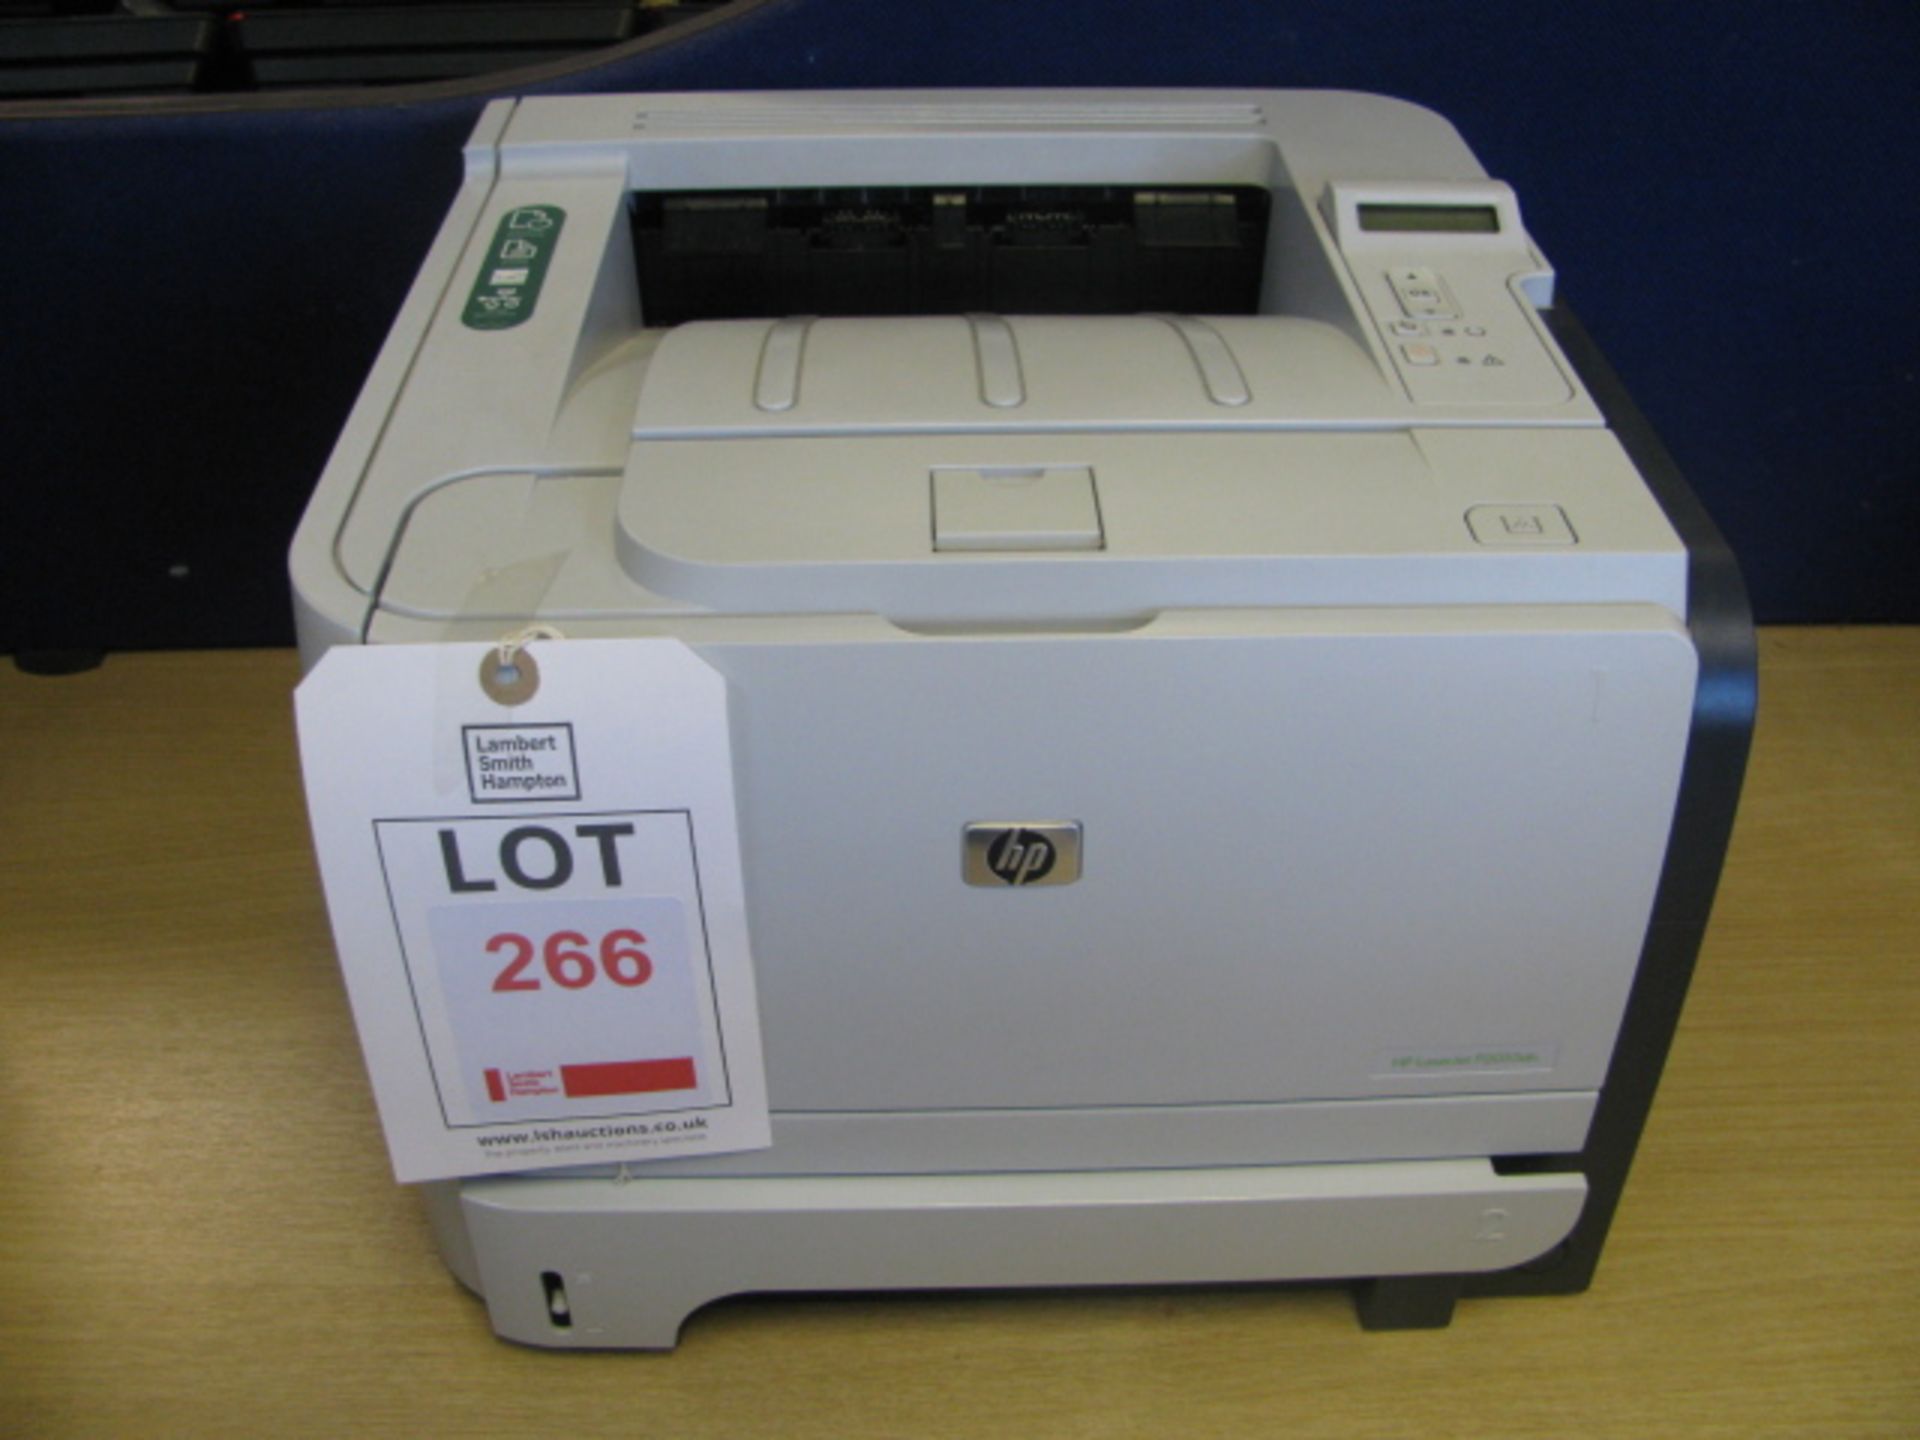 Hewlett Packard Laserjet P2055n printer